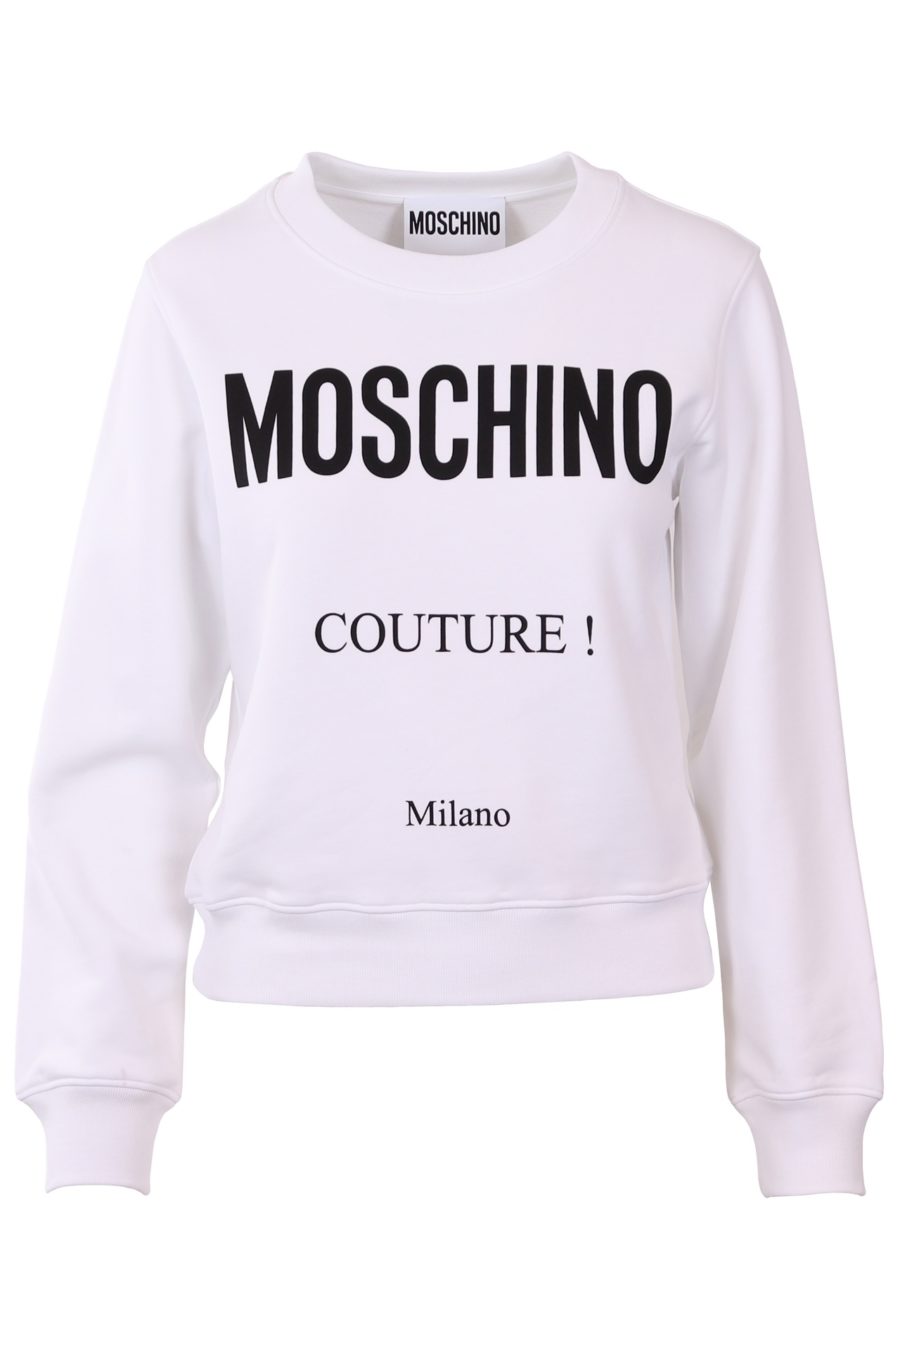 Sweatshirt Moschino Couture white with milano logo - ce7dc8991d6a0a15e7a7a7ddb086b16794d4827c6b